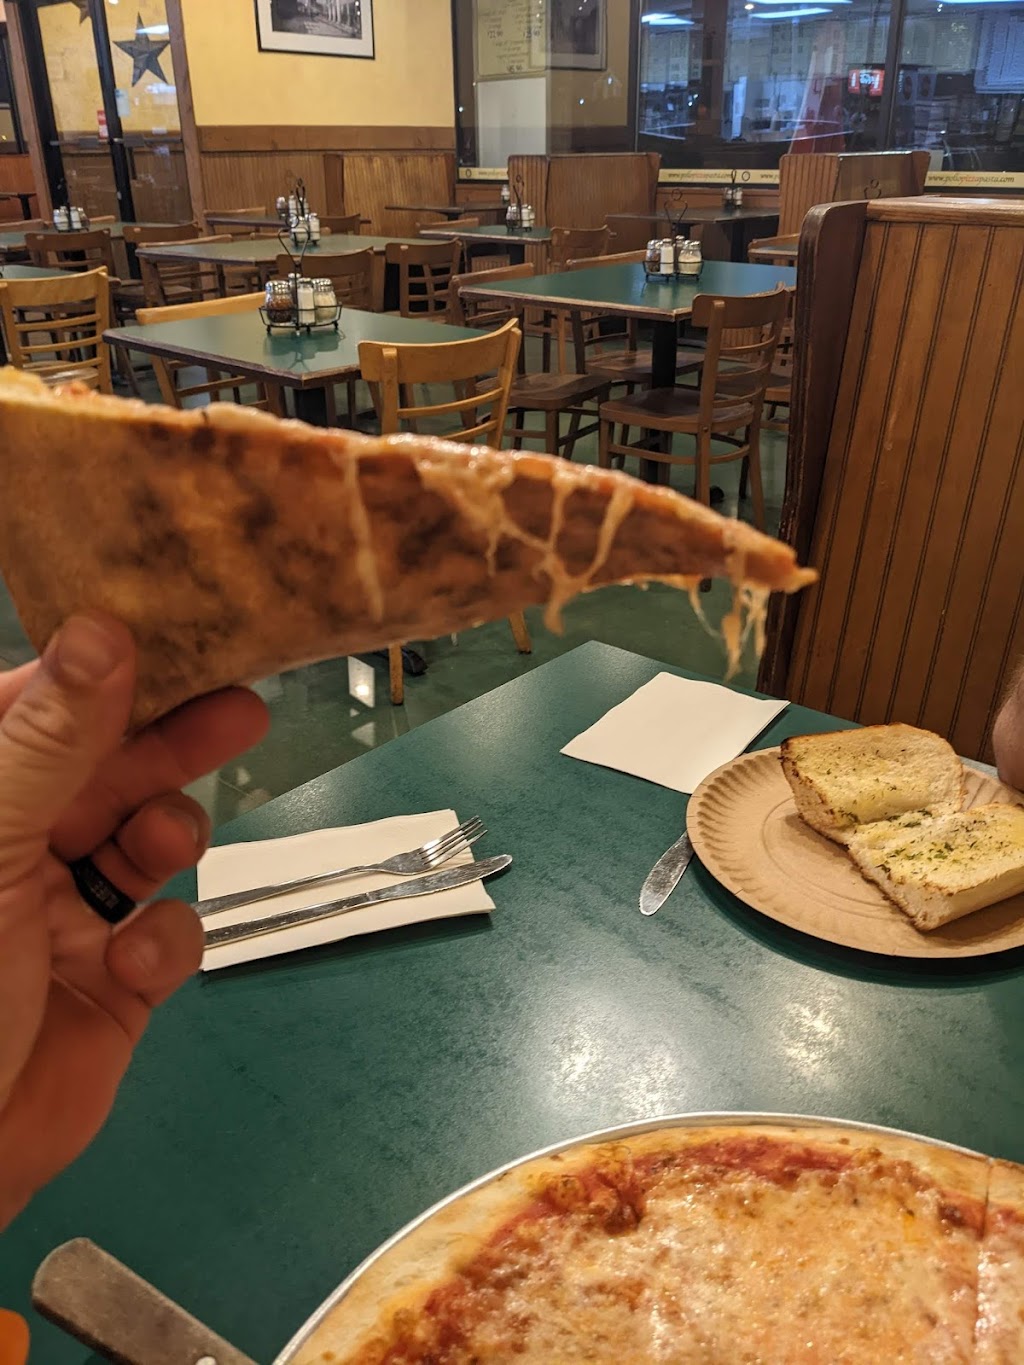 Pollo Pizza Pasta | 602/ 100 Hickory Ridge Dr, Greensboro, NC 27409, USA | Phone: (336) 841-1700